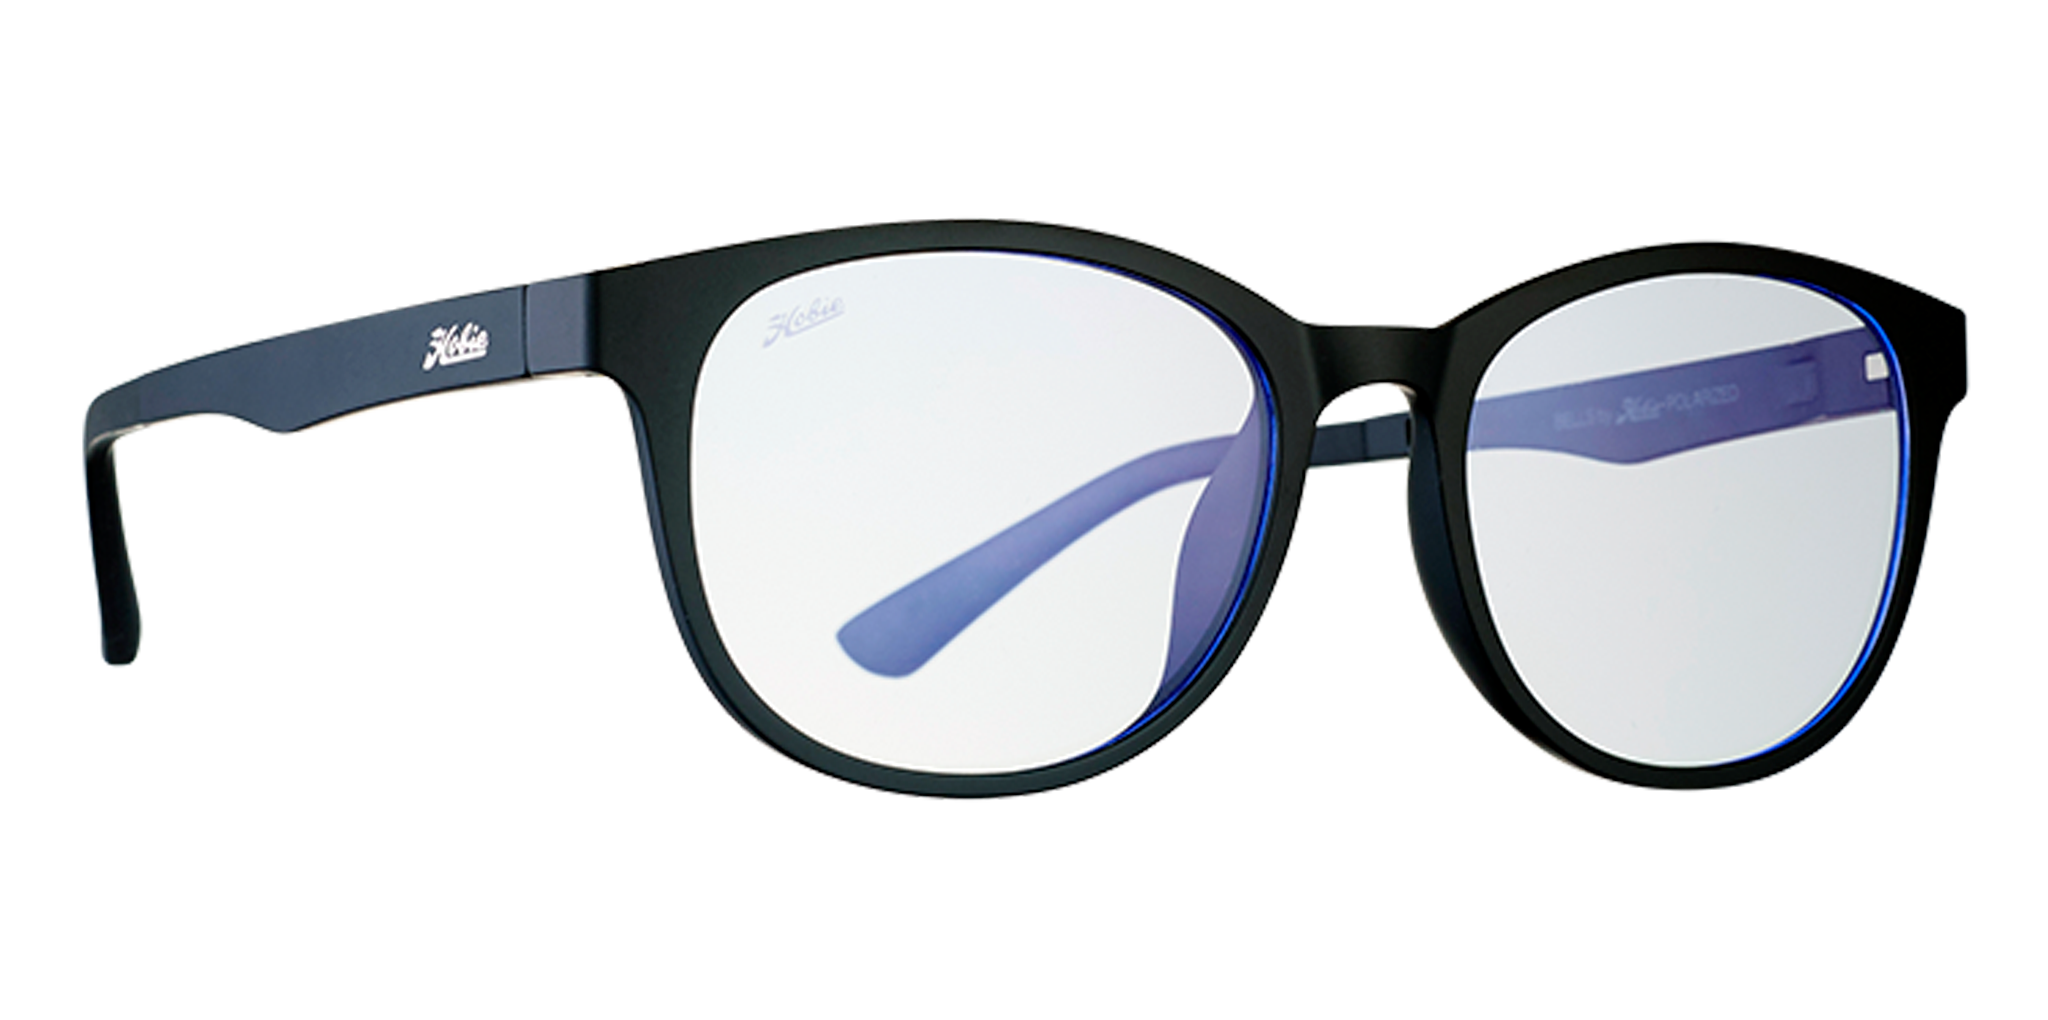 Eddie Bauer 32047 w/ Magnetic Clip-On Eyeglasses | FREE Shipping